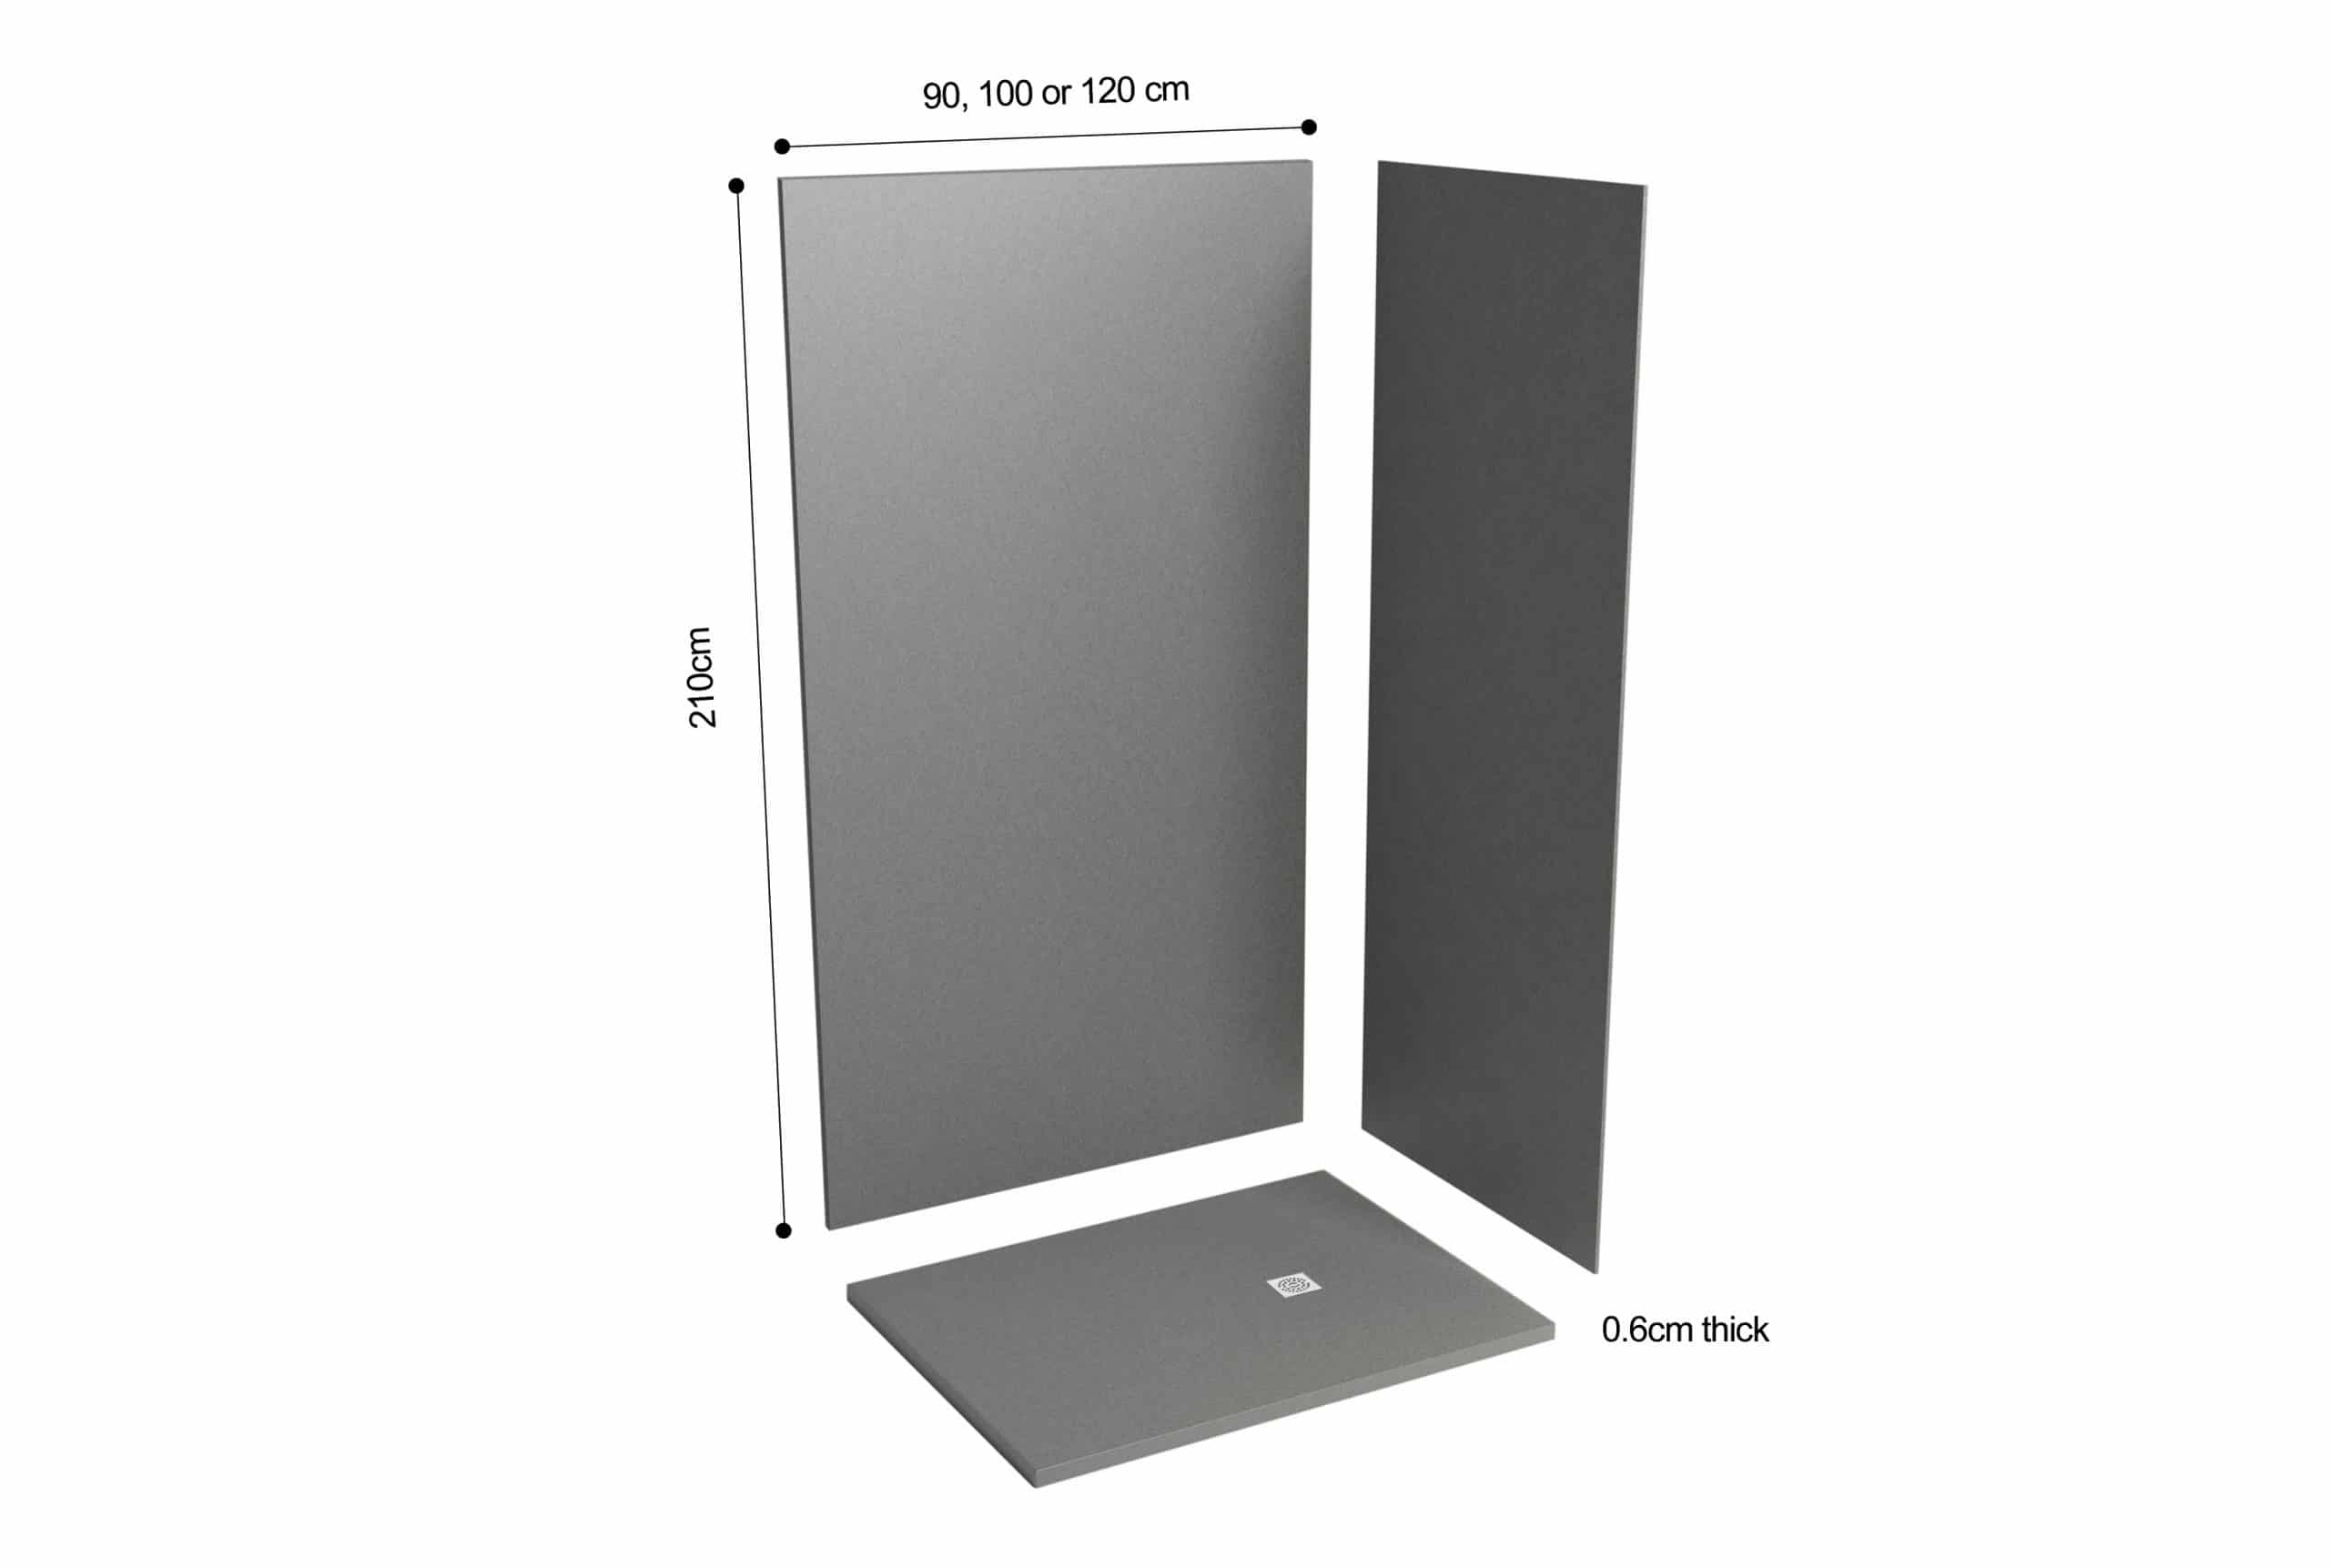 Altimax Wall Panel Dimension